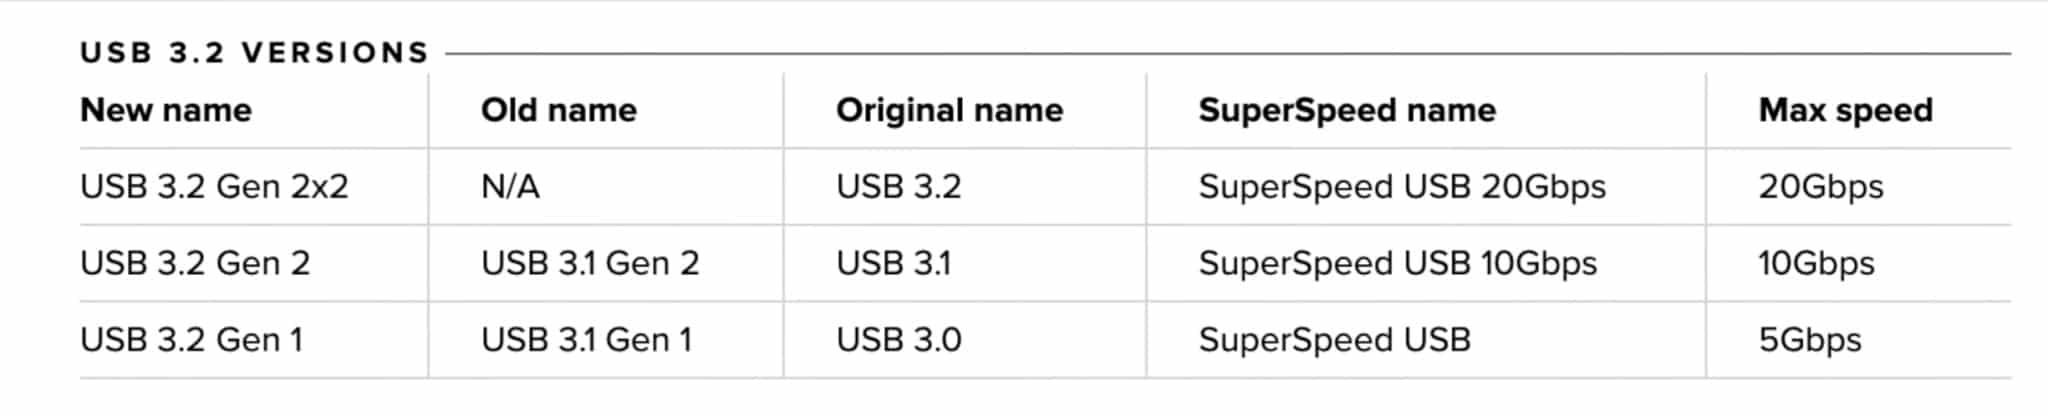 USB-3.2 version 2